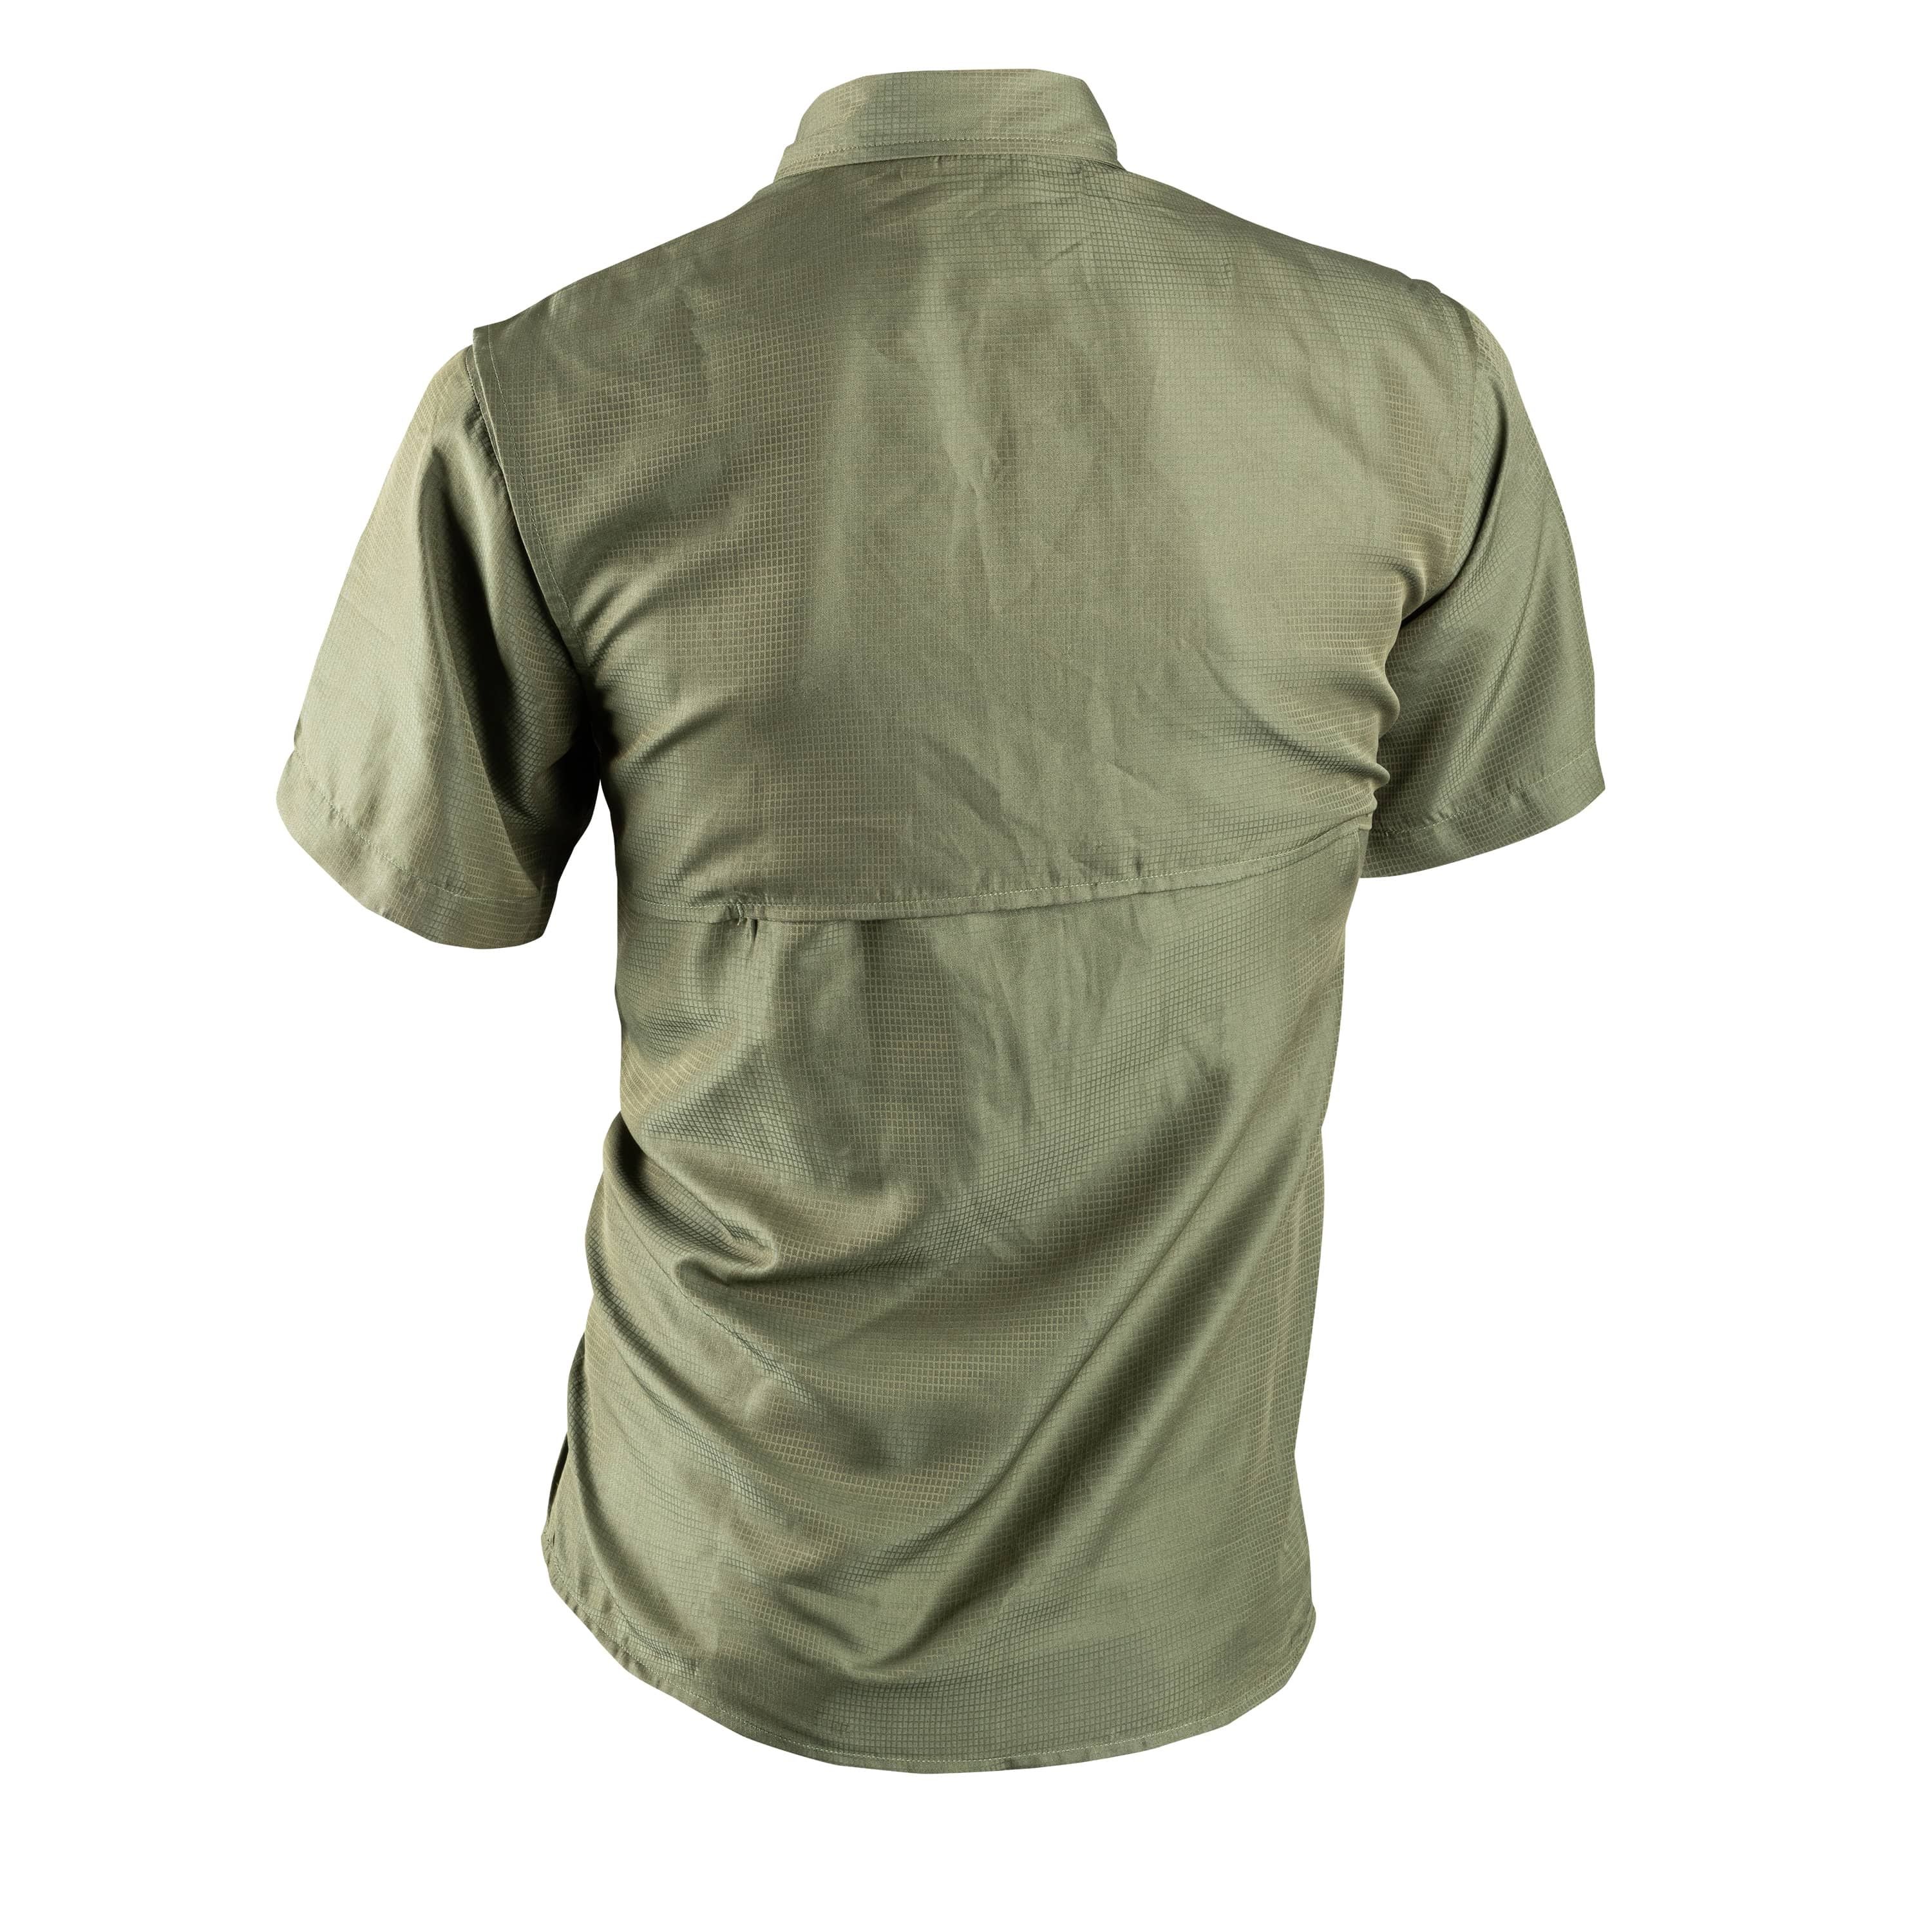 "Breathe" Short sleeve fishing shirt - Men's